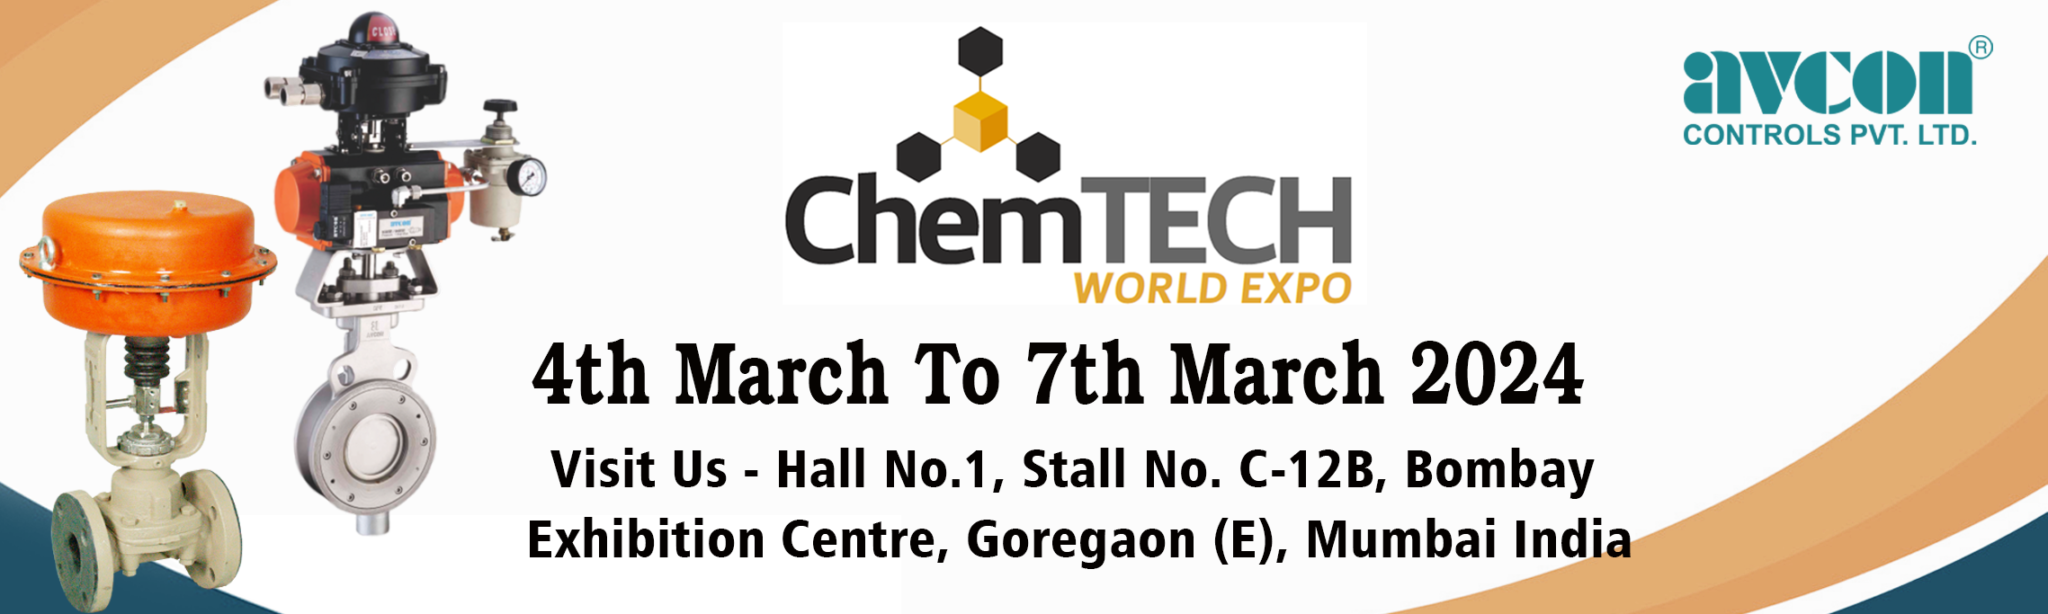 ChemTECH World Expo Exhibition 2024 Avconcontrols